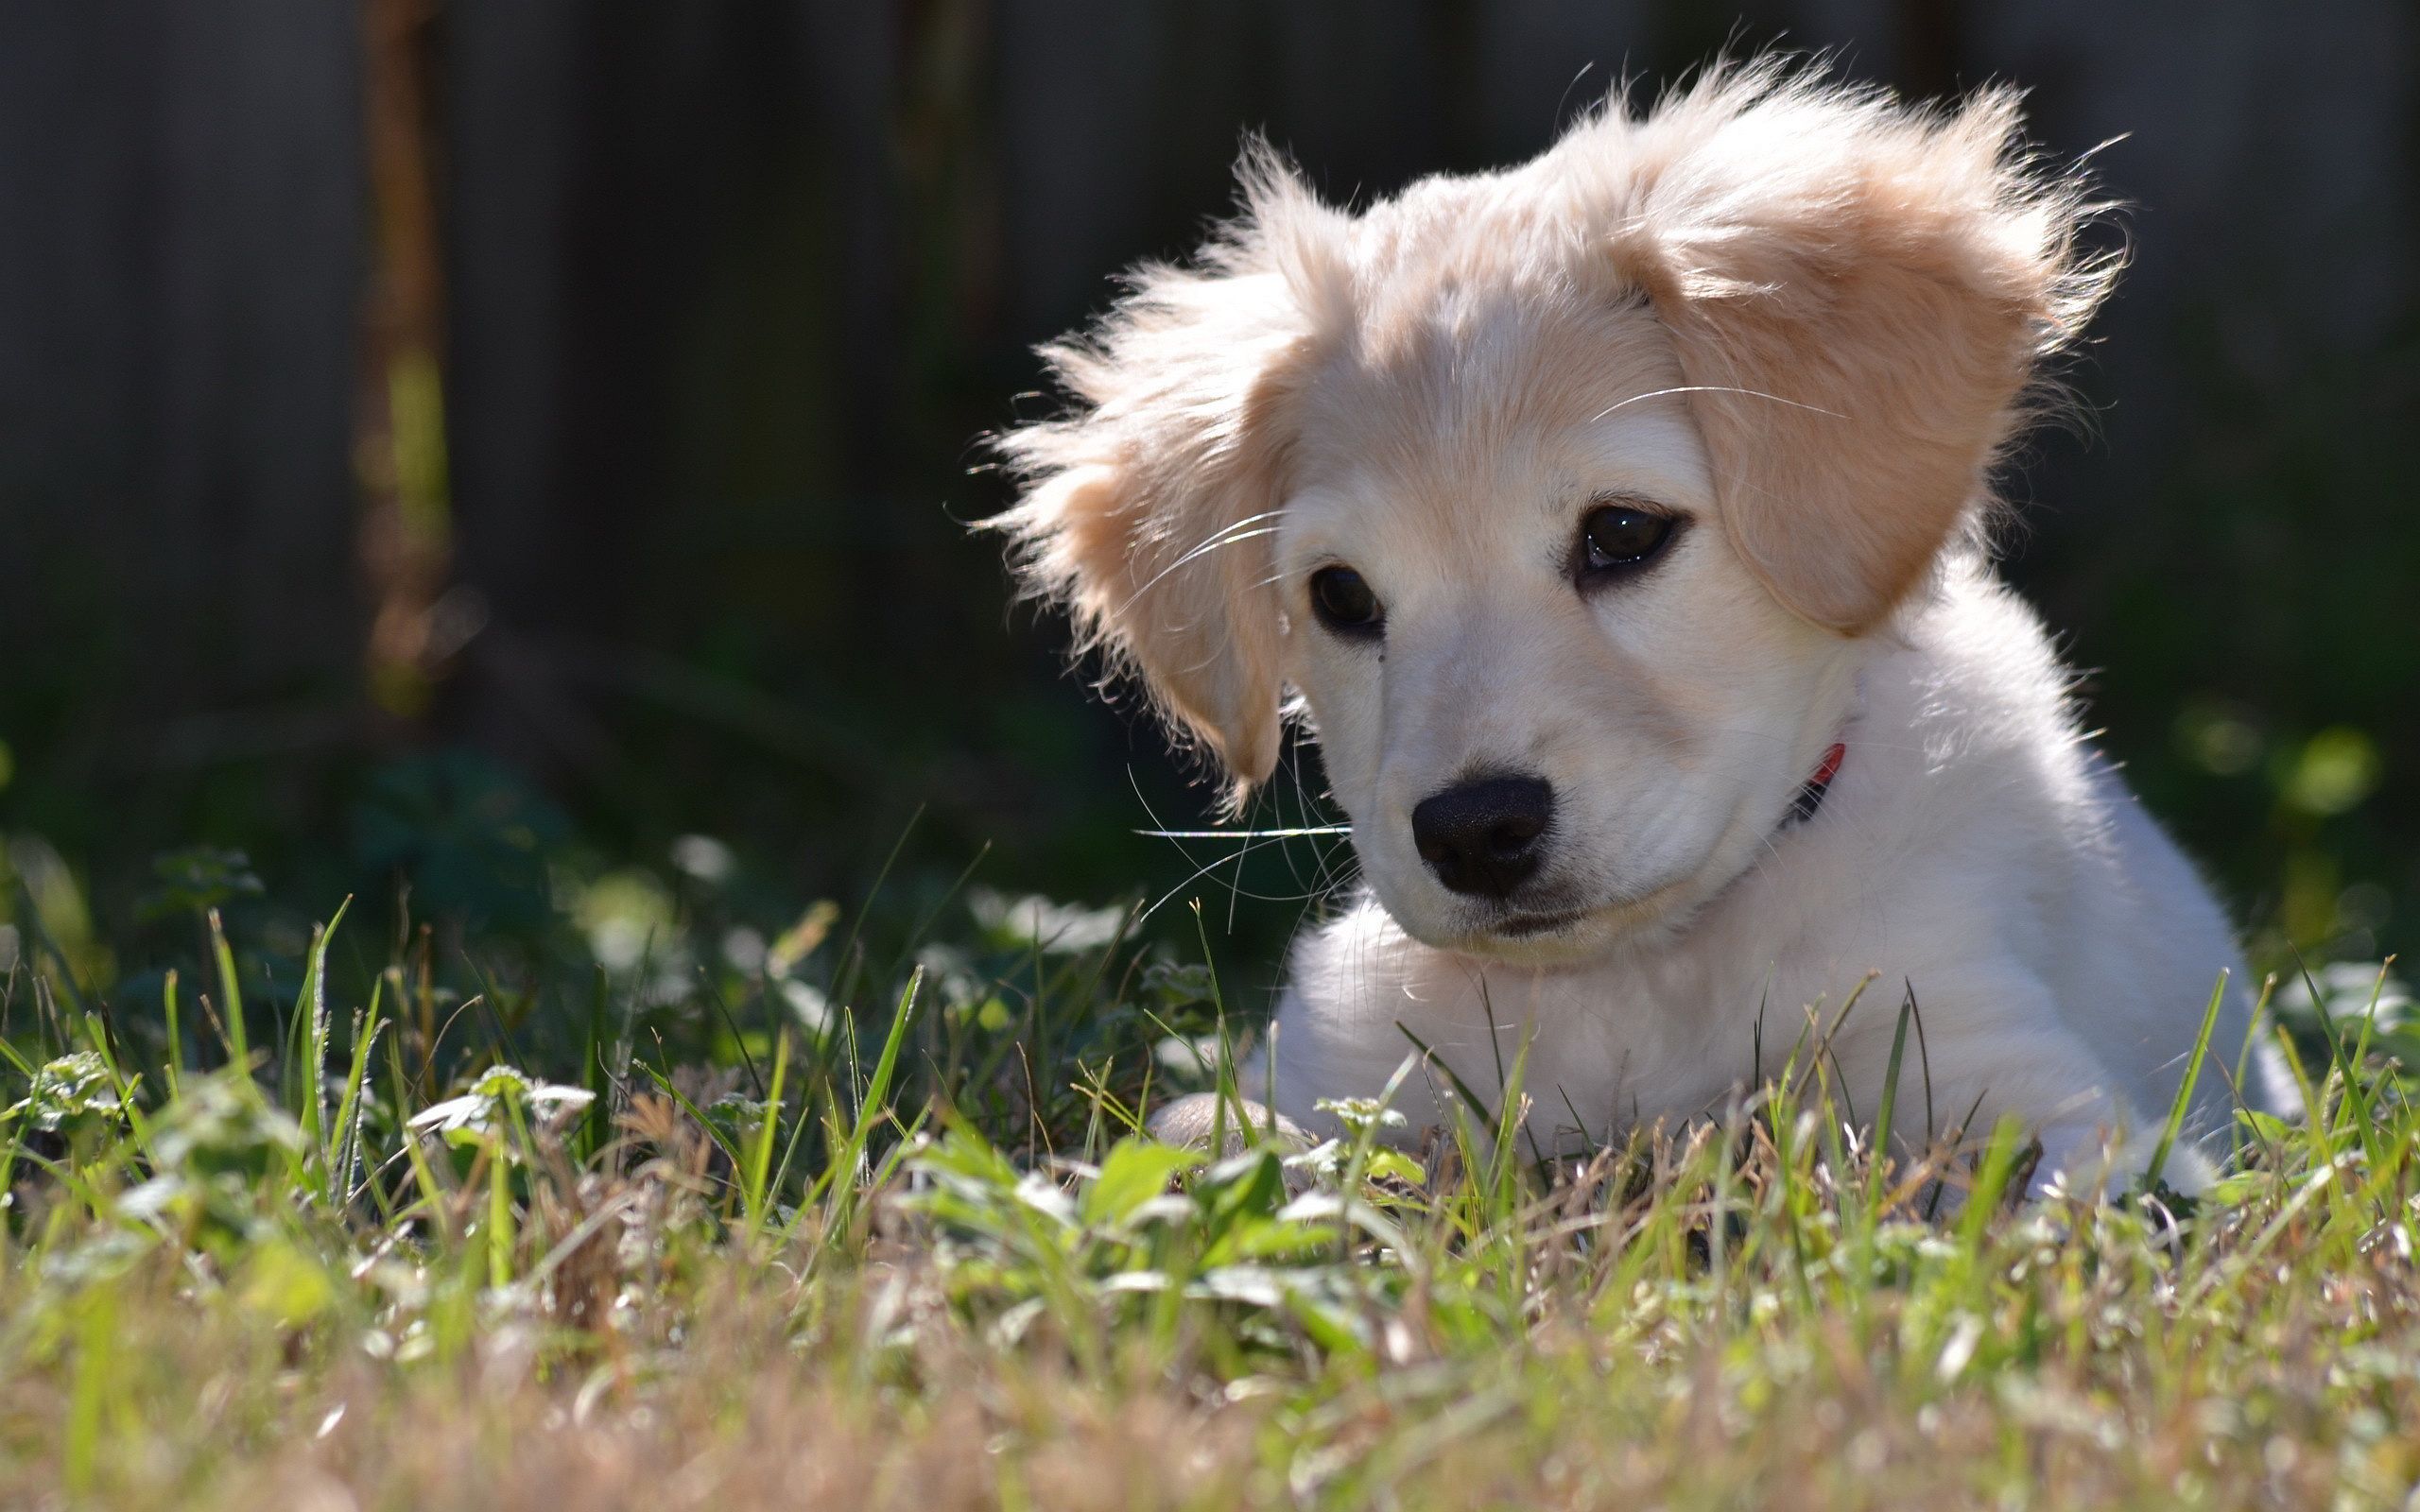 Top Golden Labrador Puppy Wallpaper Images for Pinterest